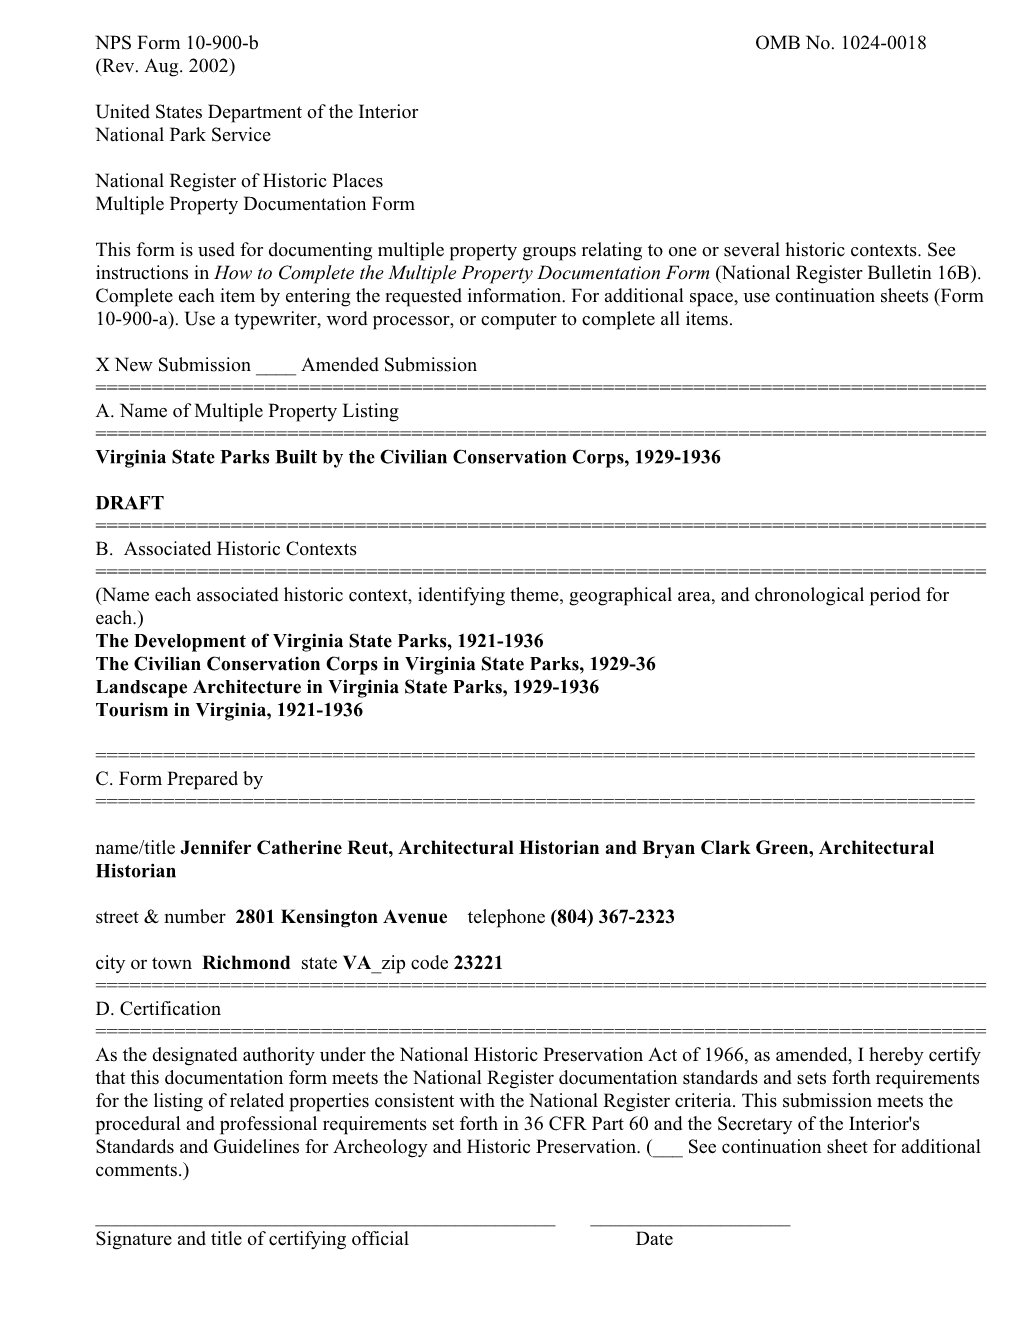 NPS Form 10-900-B OMB No. 1024-0018 (Rev